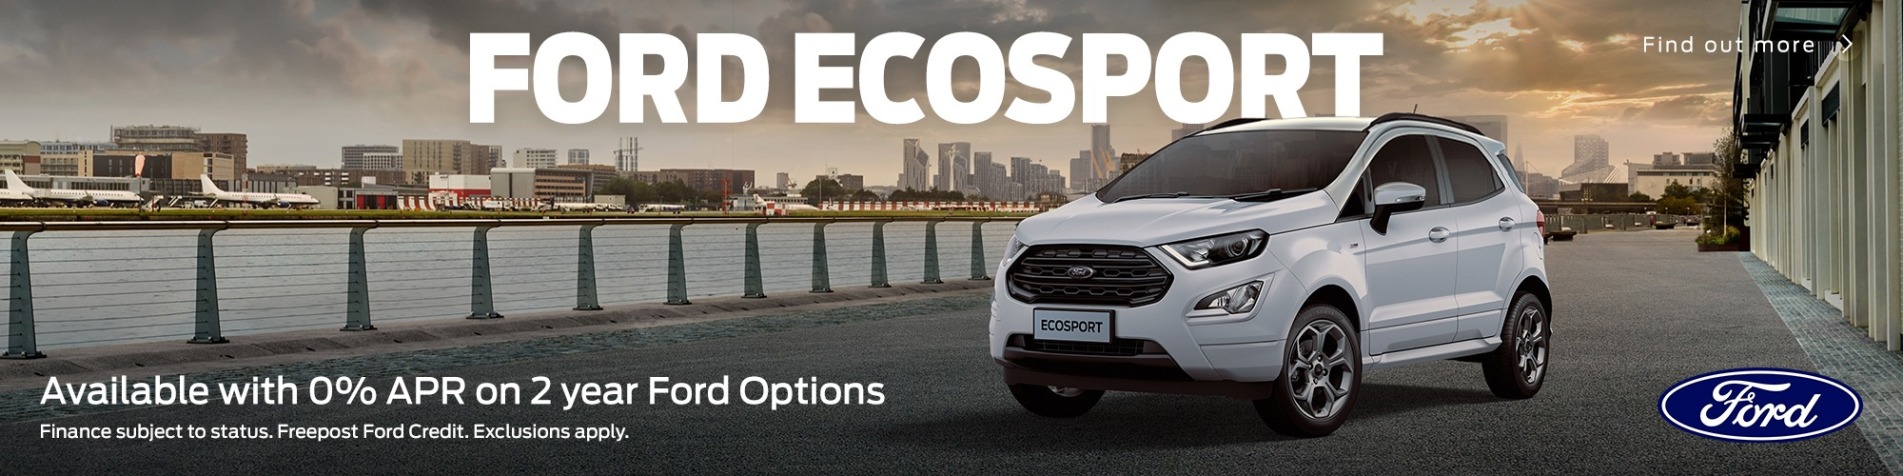 Ford Ecosport Q4